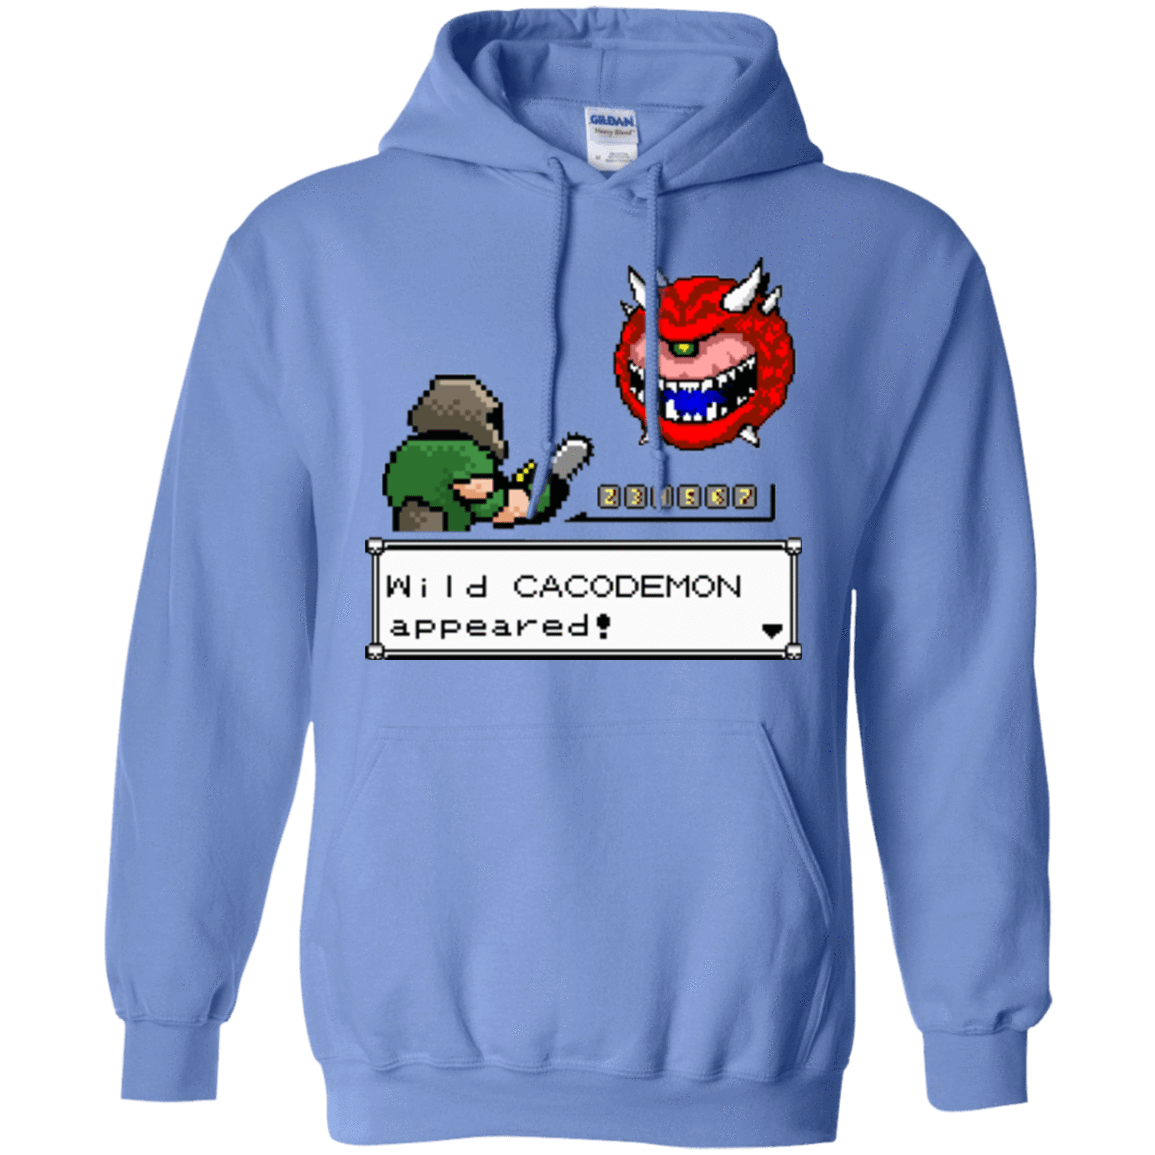 Sweatshirts Carolina Blue / Small A Wild Cacodemon Pullover Hoodie